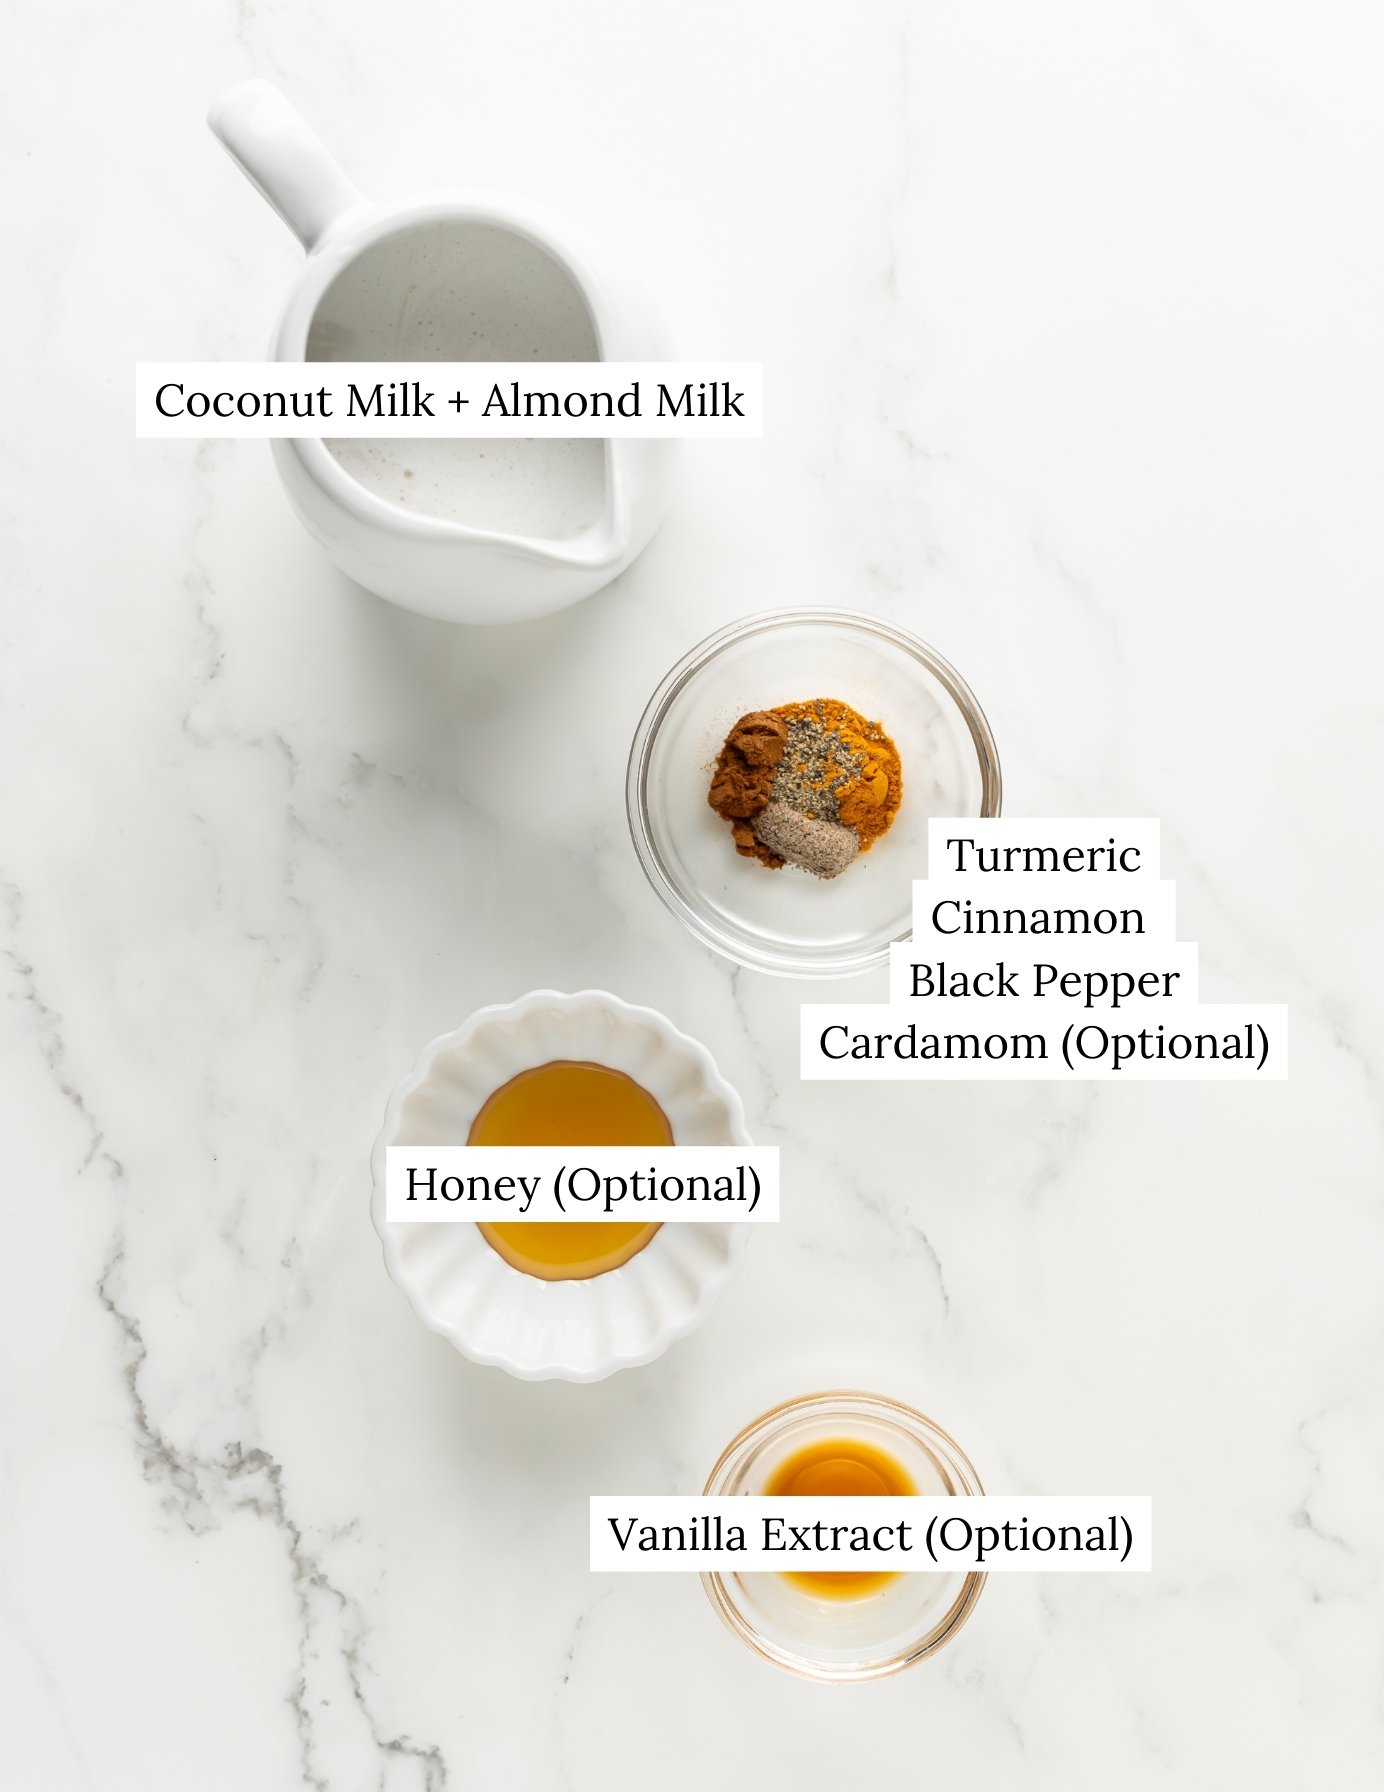 Ingredient shot of coconut milk, almond milk, spices, honey, and vanilla extract to make a golden milk latte.